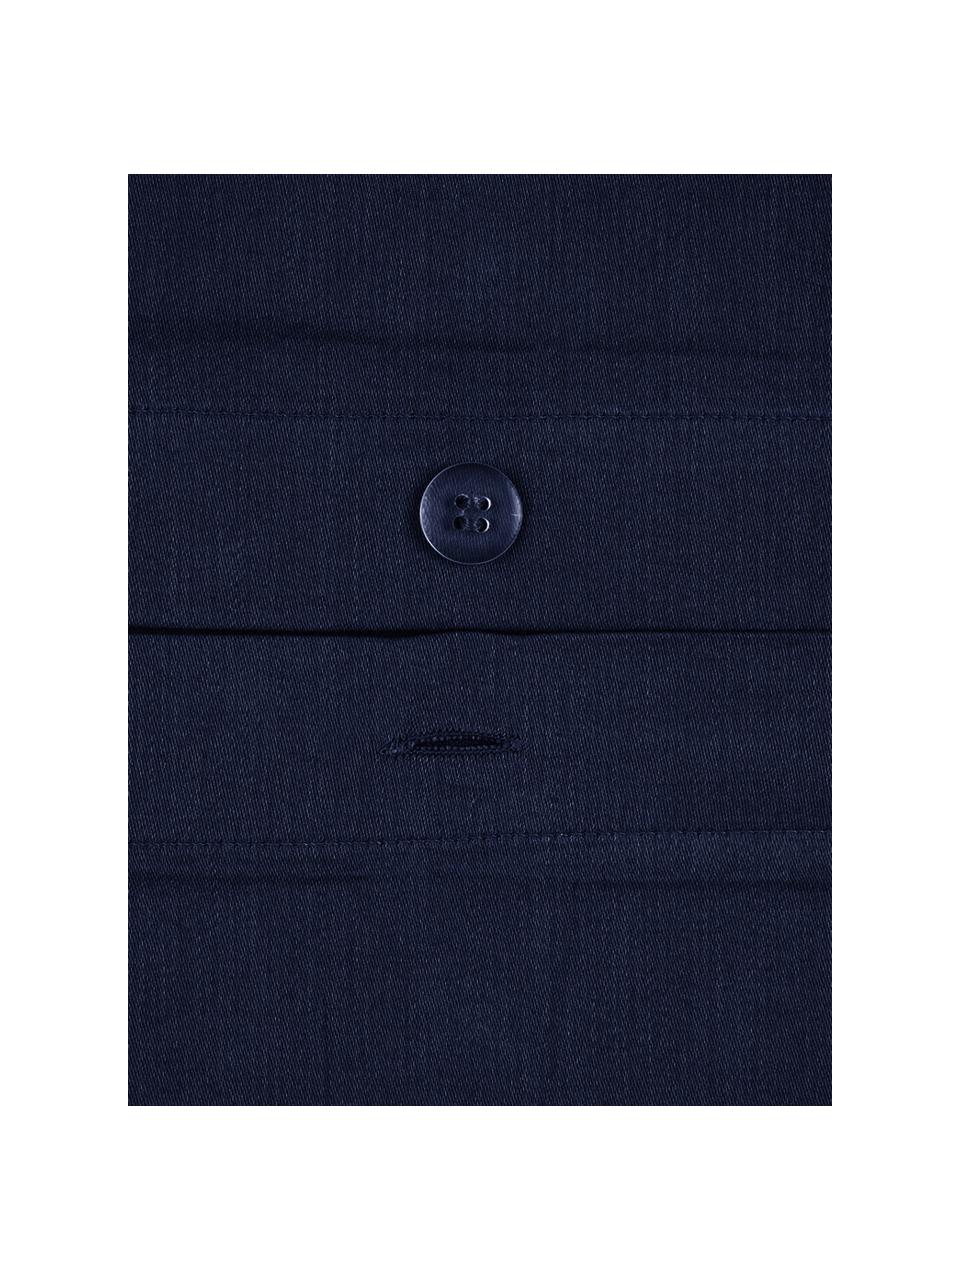 Baumwollsatin-Kissenbezug Comfort in Dunkelblau, 65 x 100 cm, Webart: Satin, leicht glänzend Fa, Dunkelblau, B 65 x L 100 cm